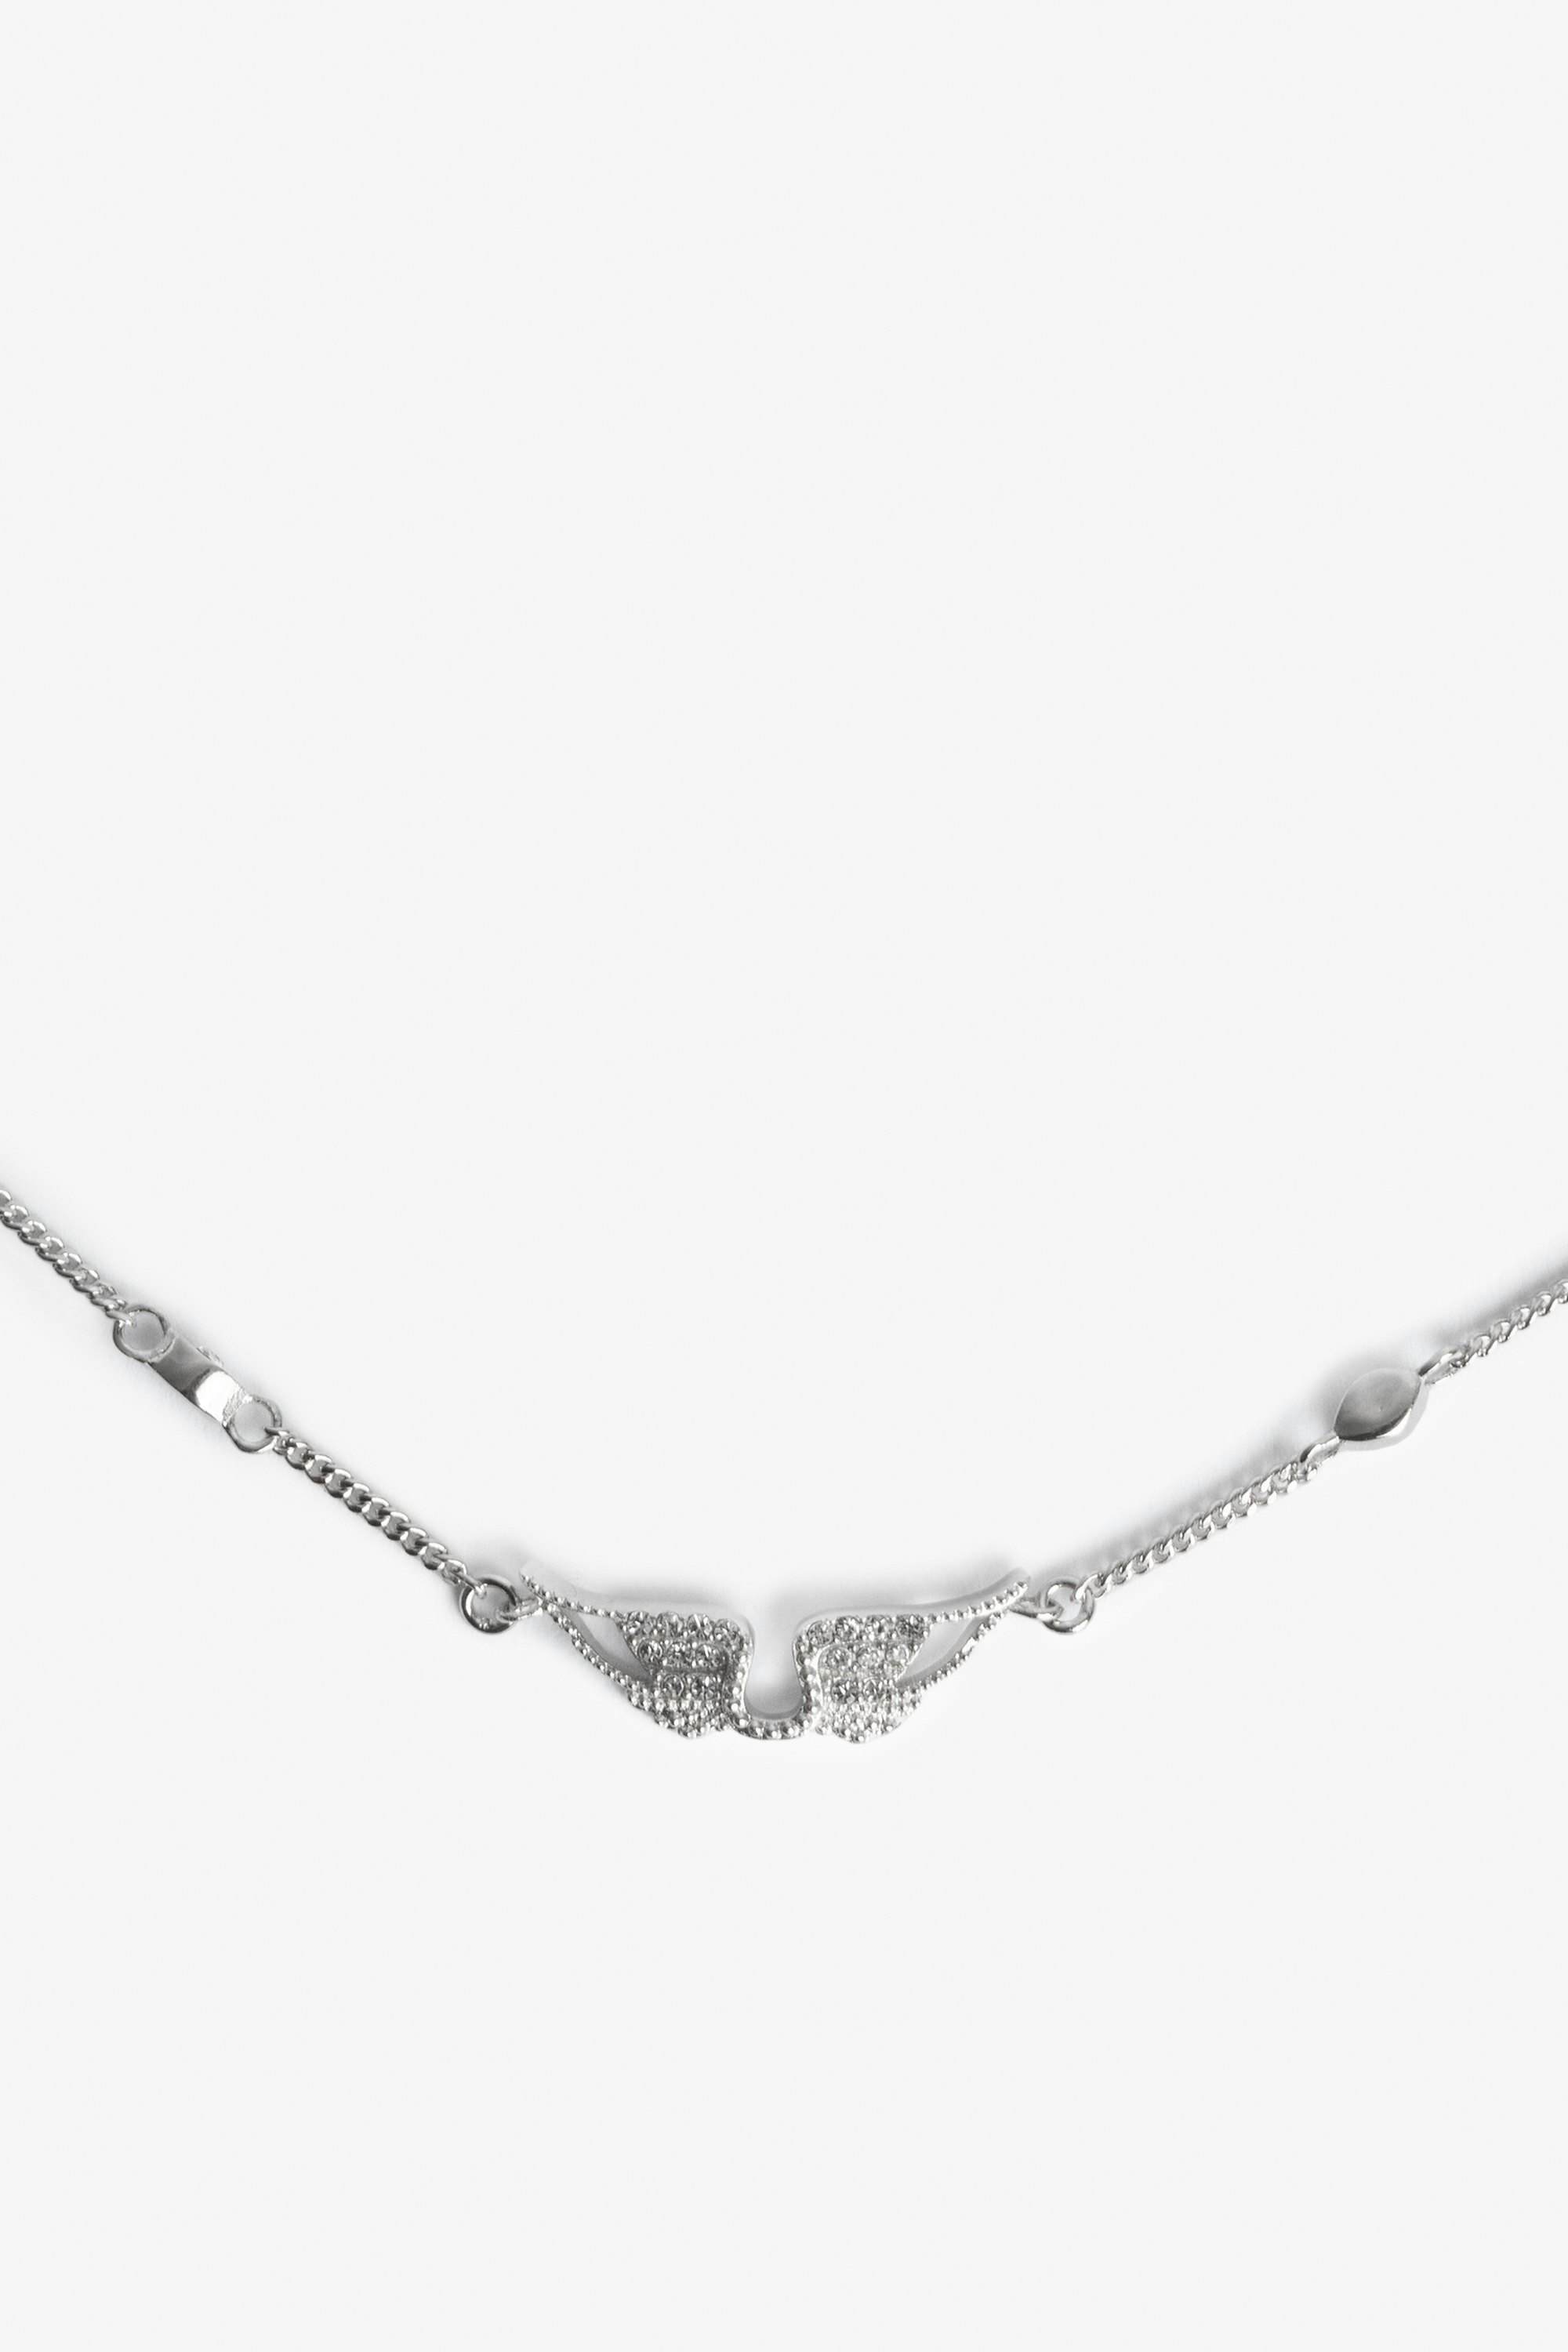 Rock Choker Necklace Women's brass and black rhinestone necklace